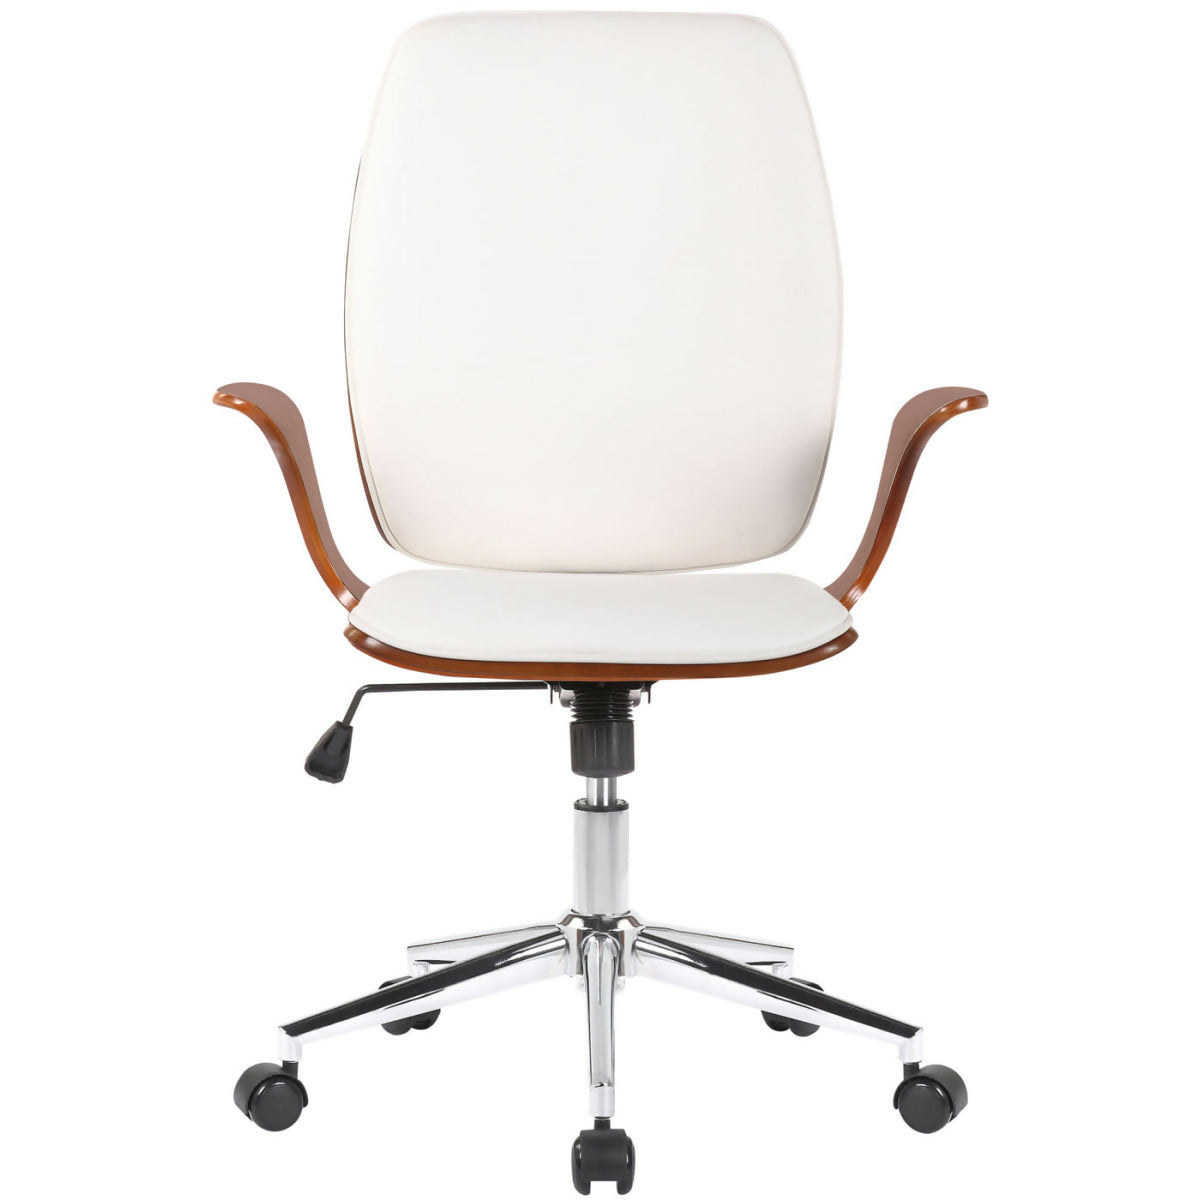 Burbank office chair - Walnut - White - 0